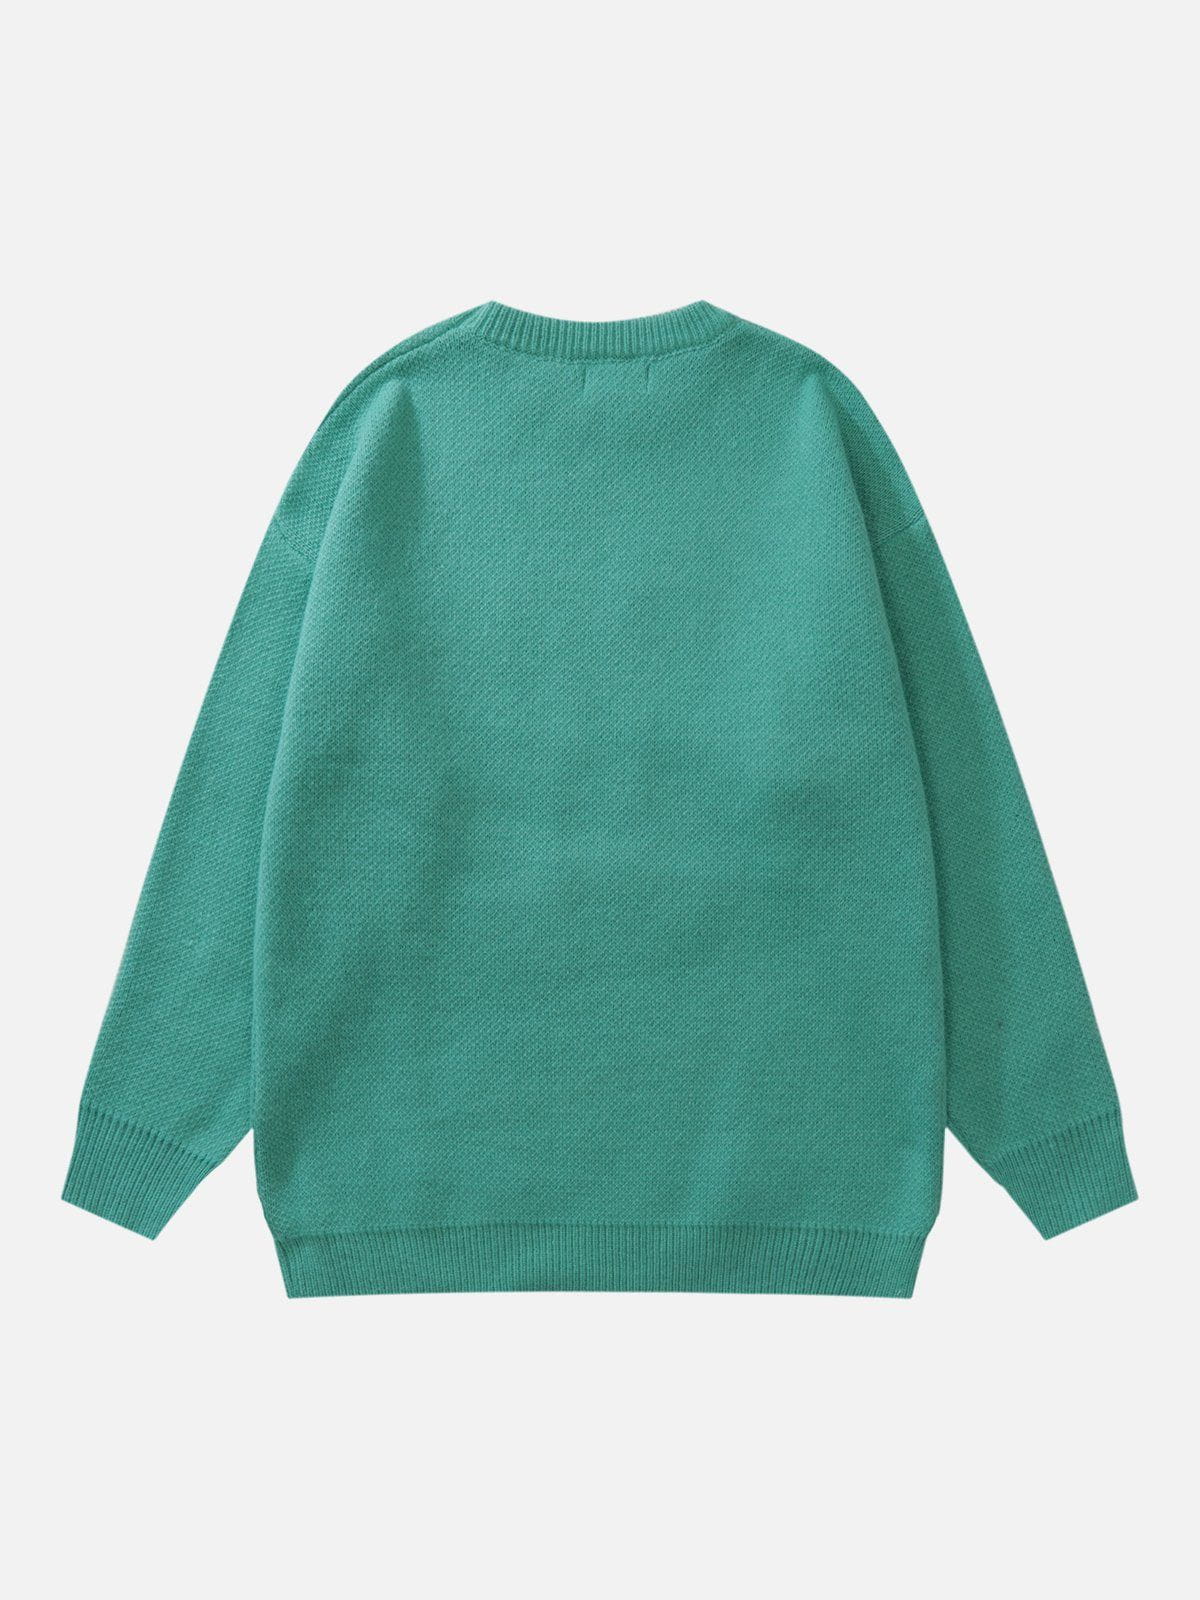 Majesda® - Flocked Letter Sweater outfit ideas streetwear fashion